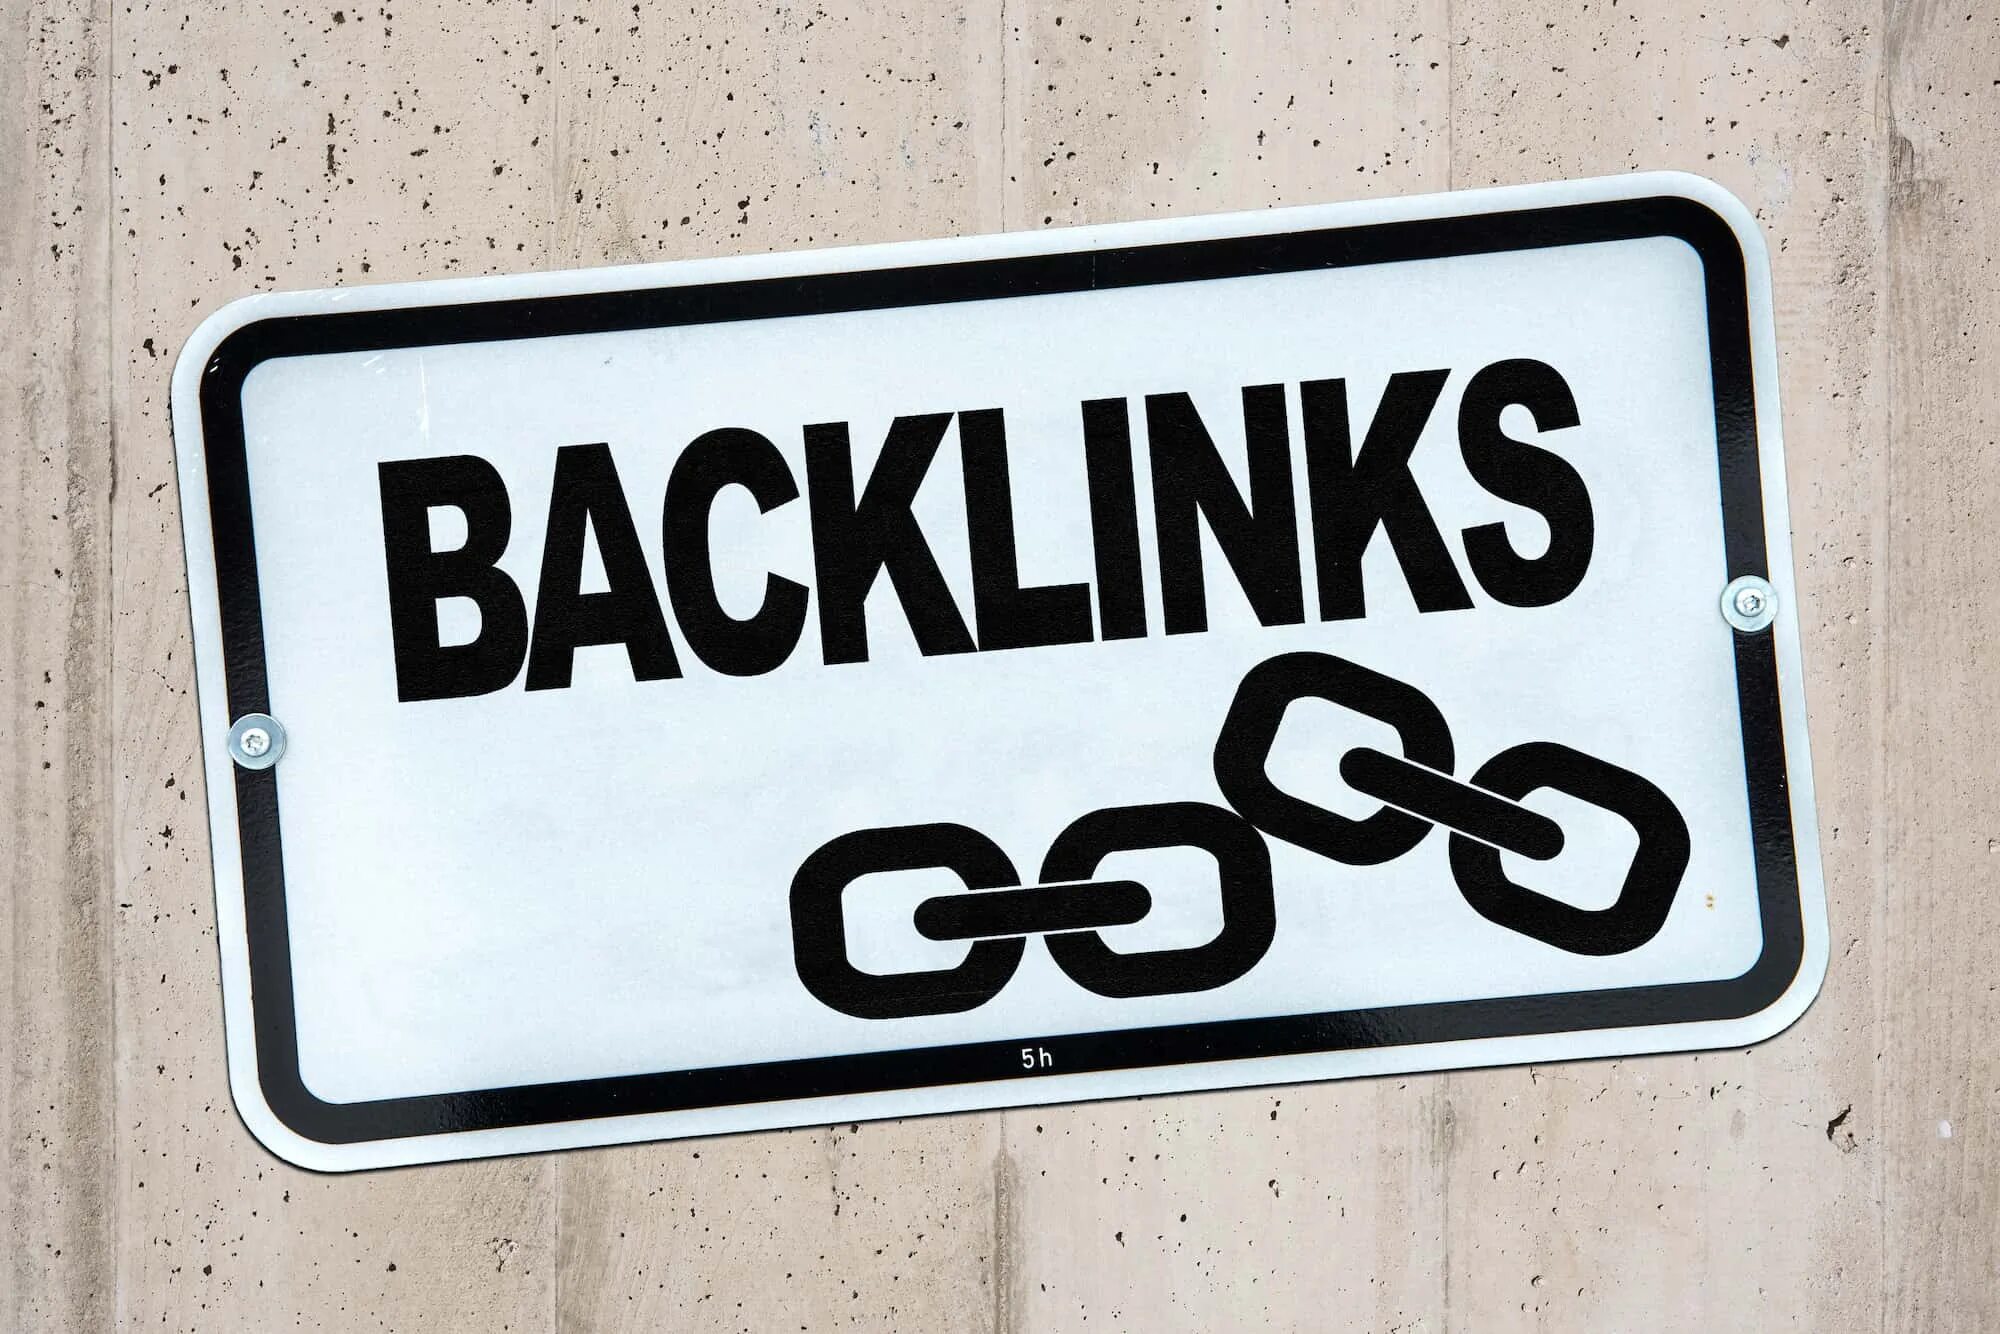 Backlinks. Buy PBN backlinks. Cheap backlinks service. How to buy backlinks. I do not follow